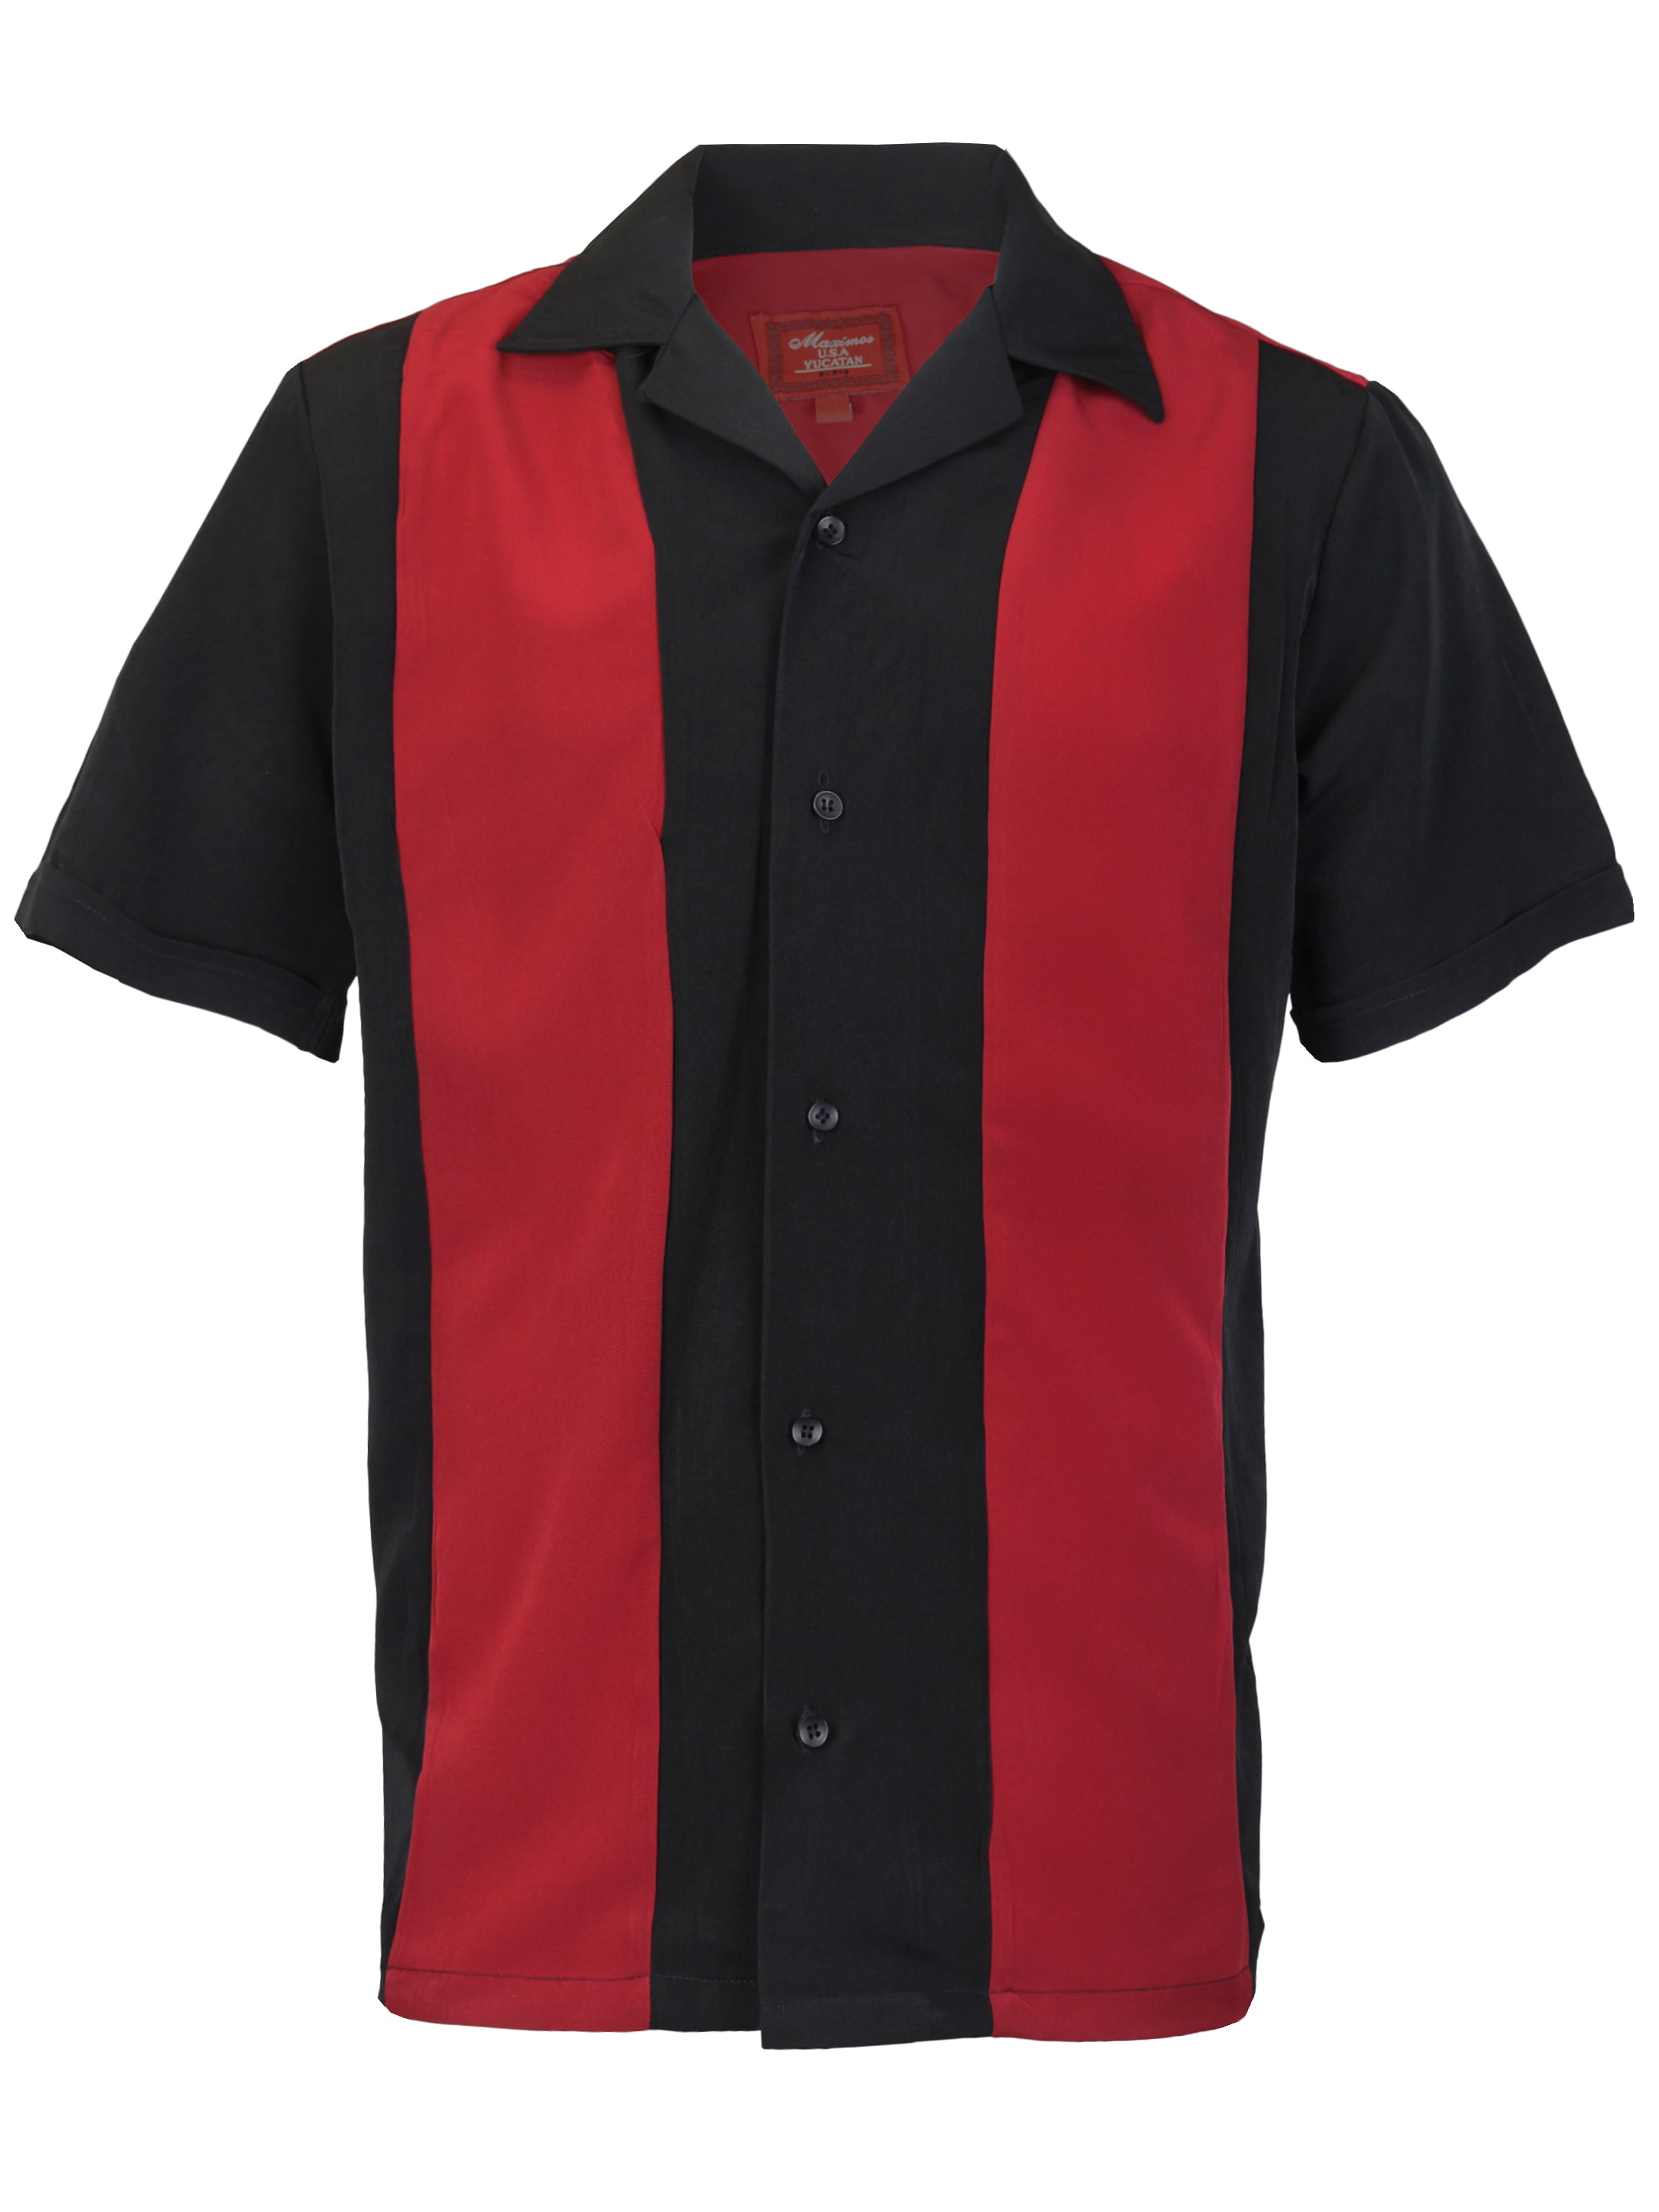 Men's Two Tone Bowling Casual Dress Shirt (Red / Black,4XL) - Walmart.com